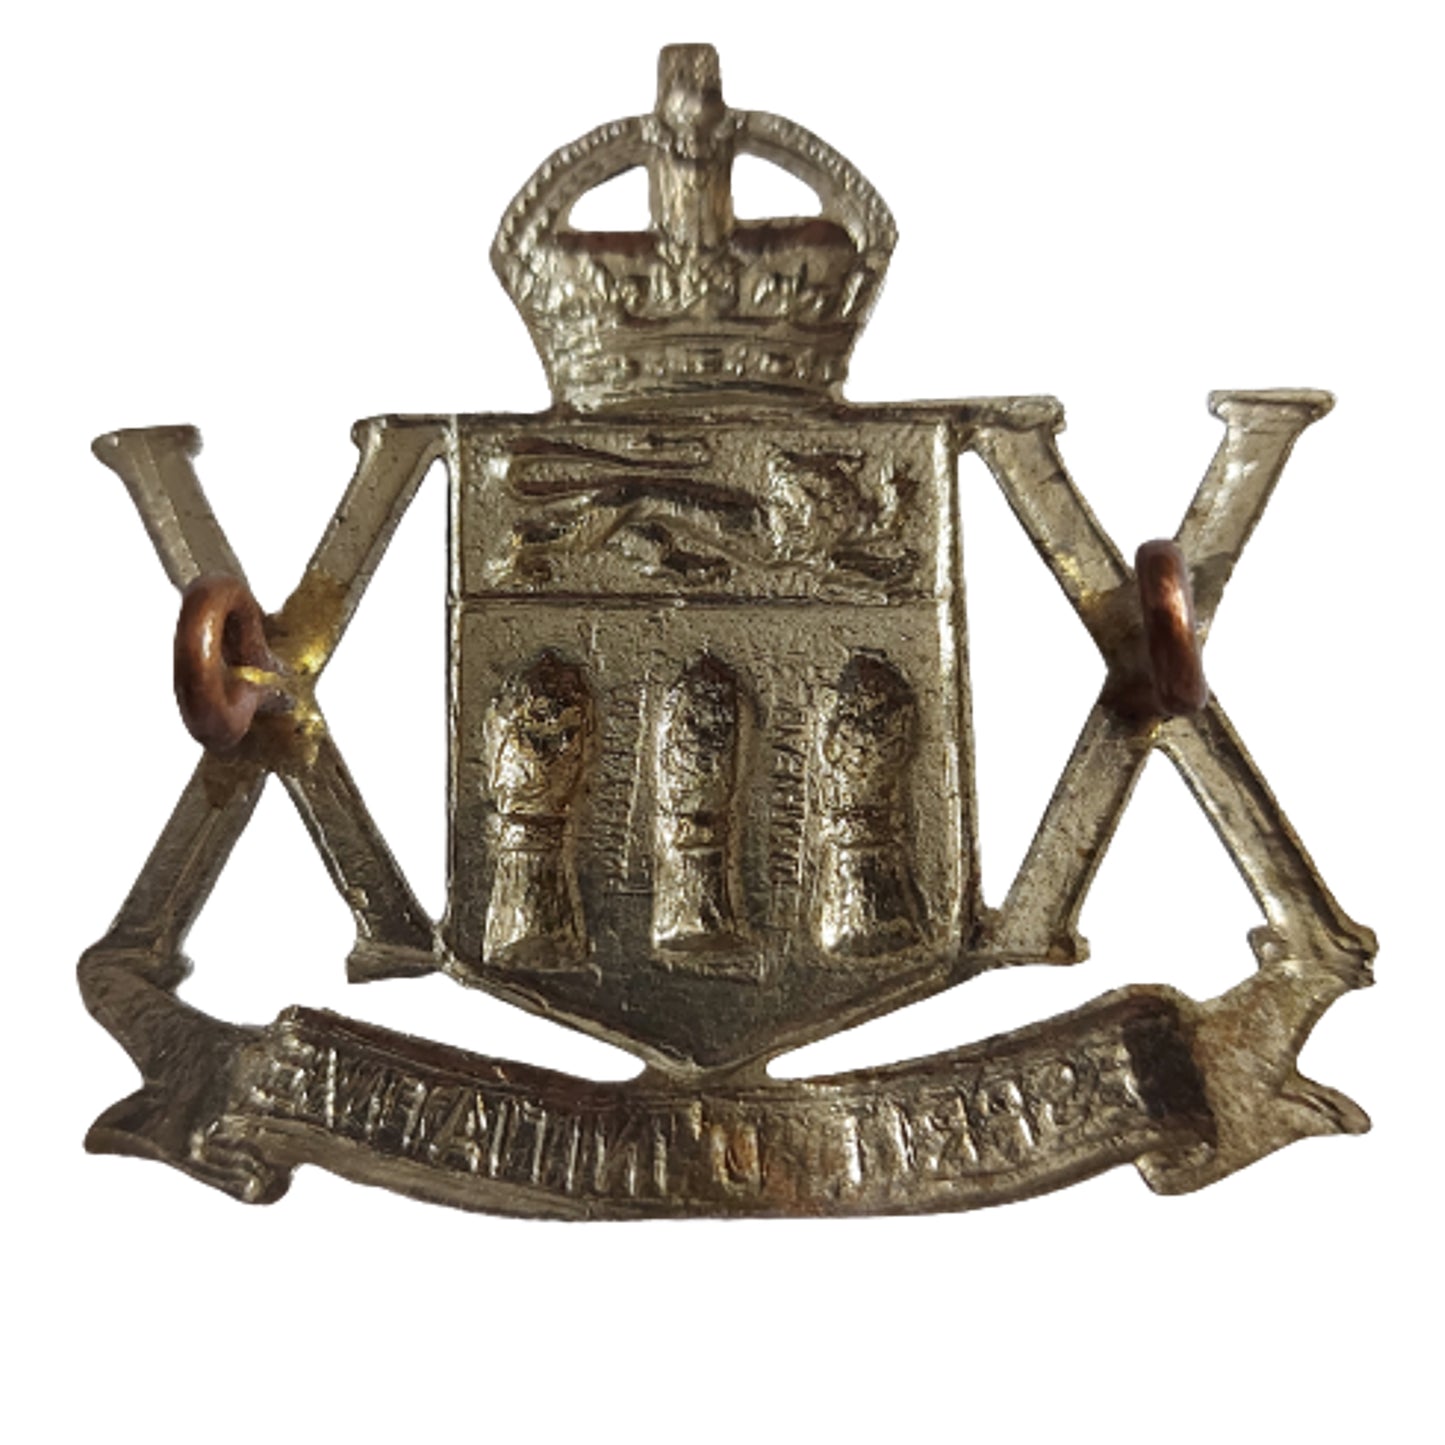 1949 20th Saskatchewan Armored Corps Cap Badge